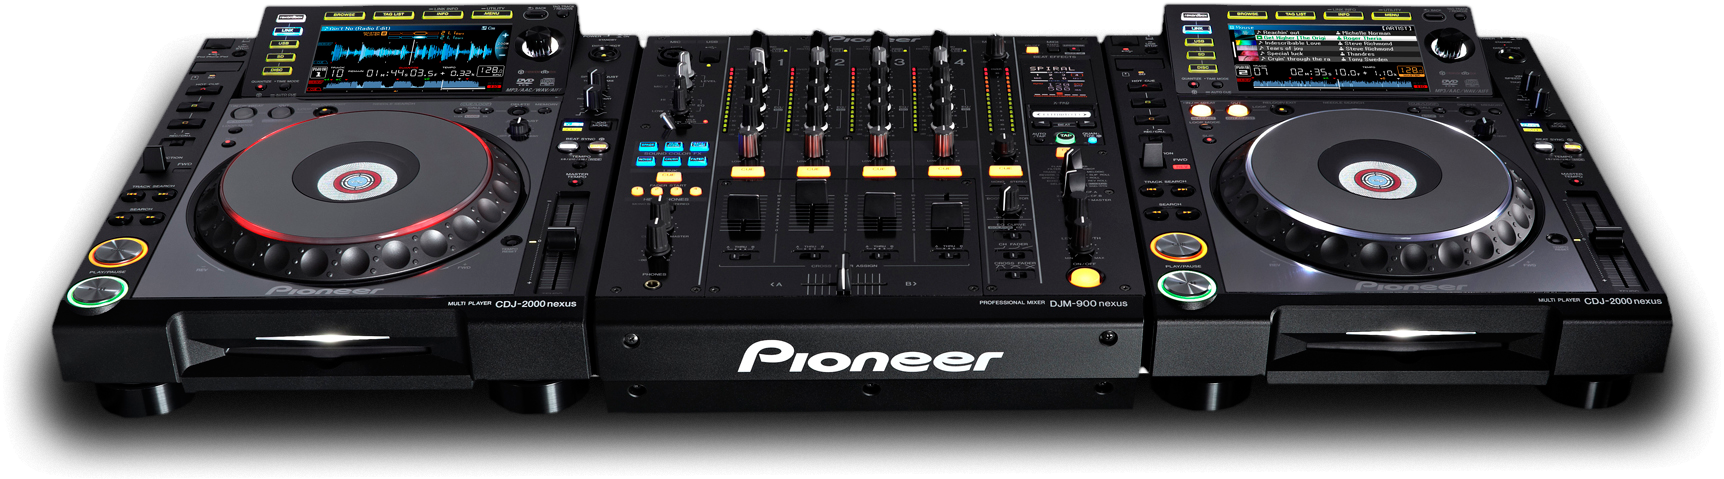 Disque jockey pioneer DJ Controller PNG